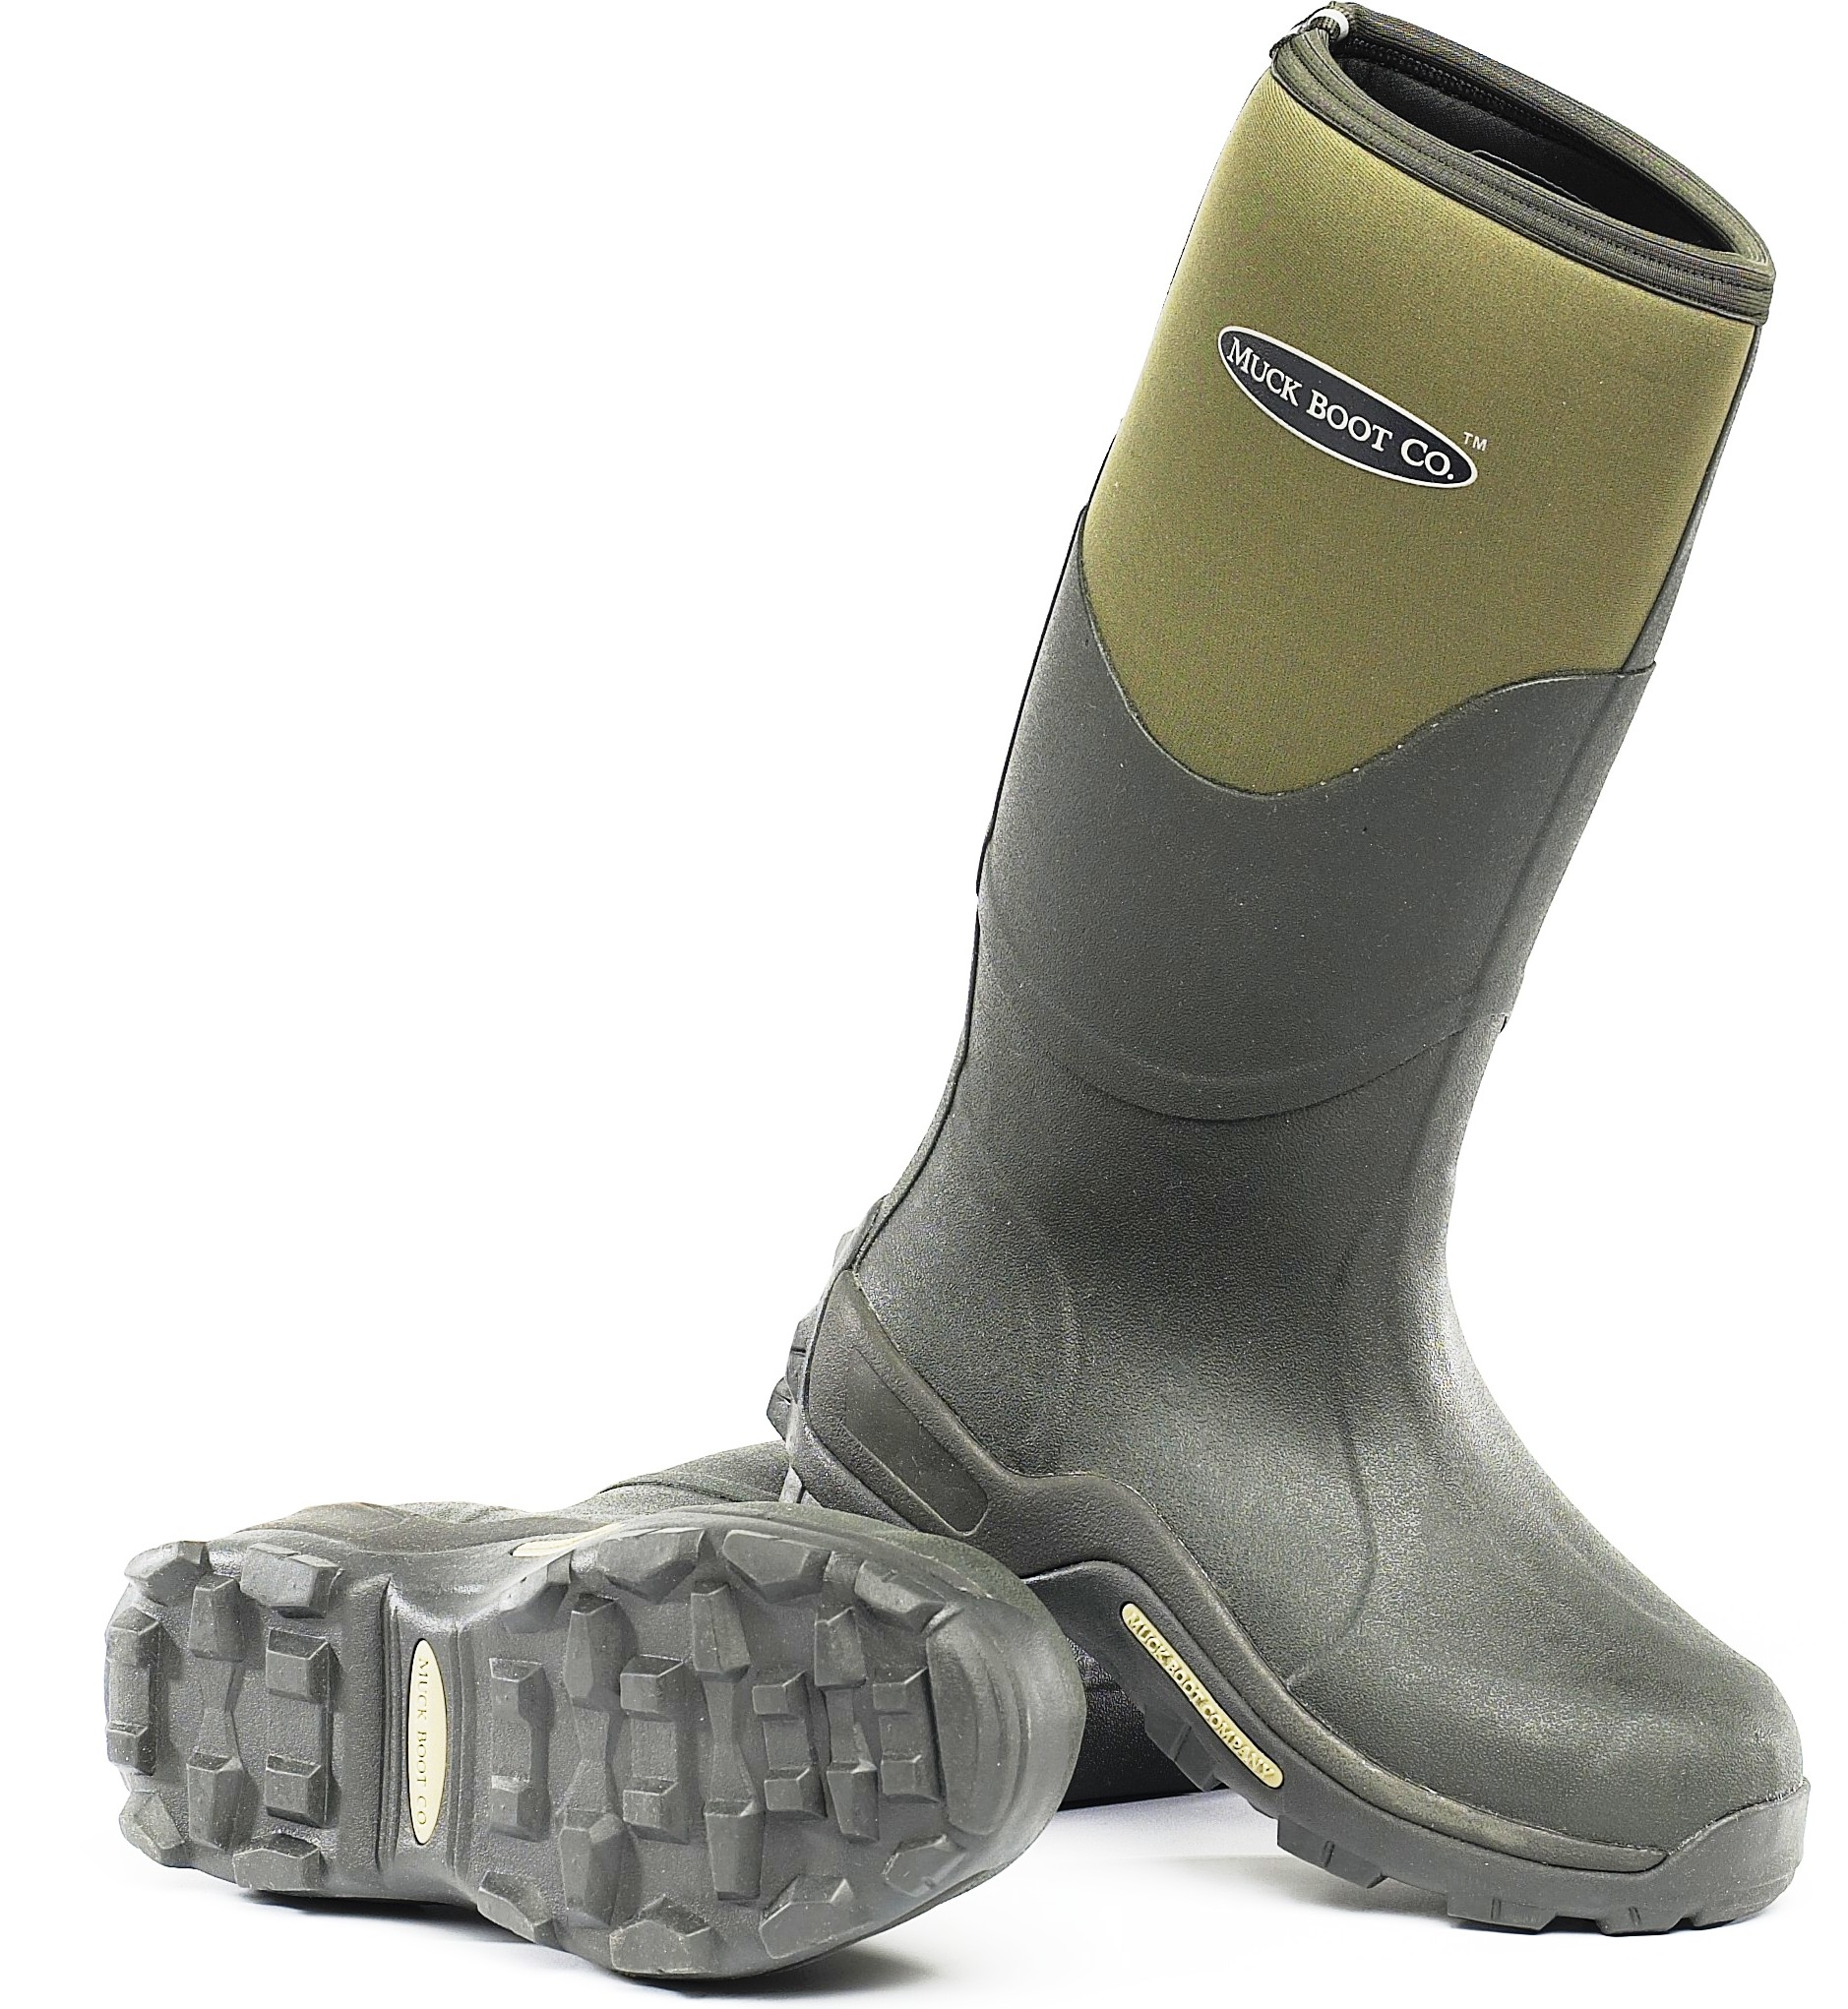 Muck Boot Company Uk Stockists - Yu Boots